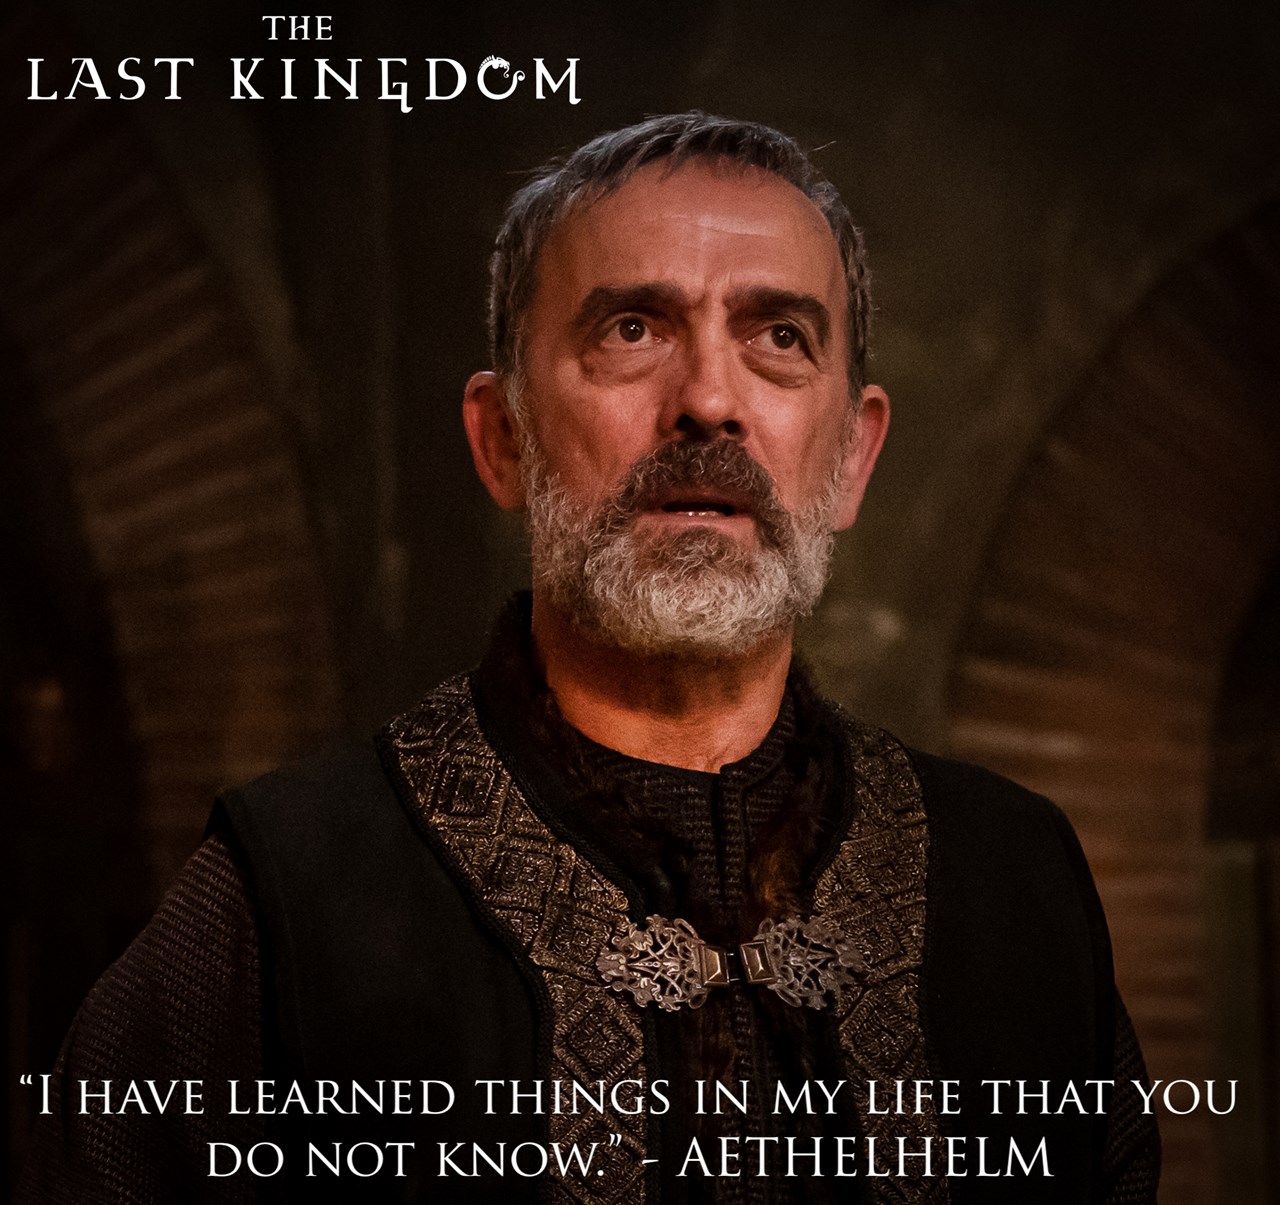 The Last Kingdom': I Watched It! Should You? - FictionTalk